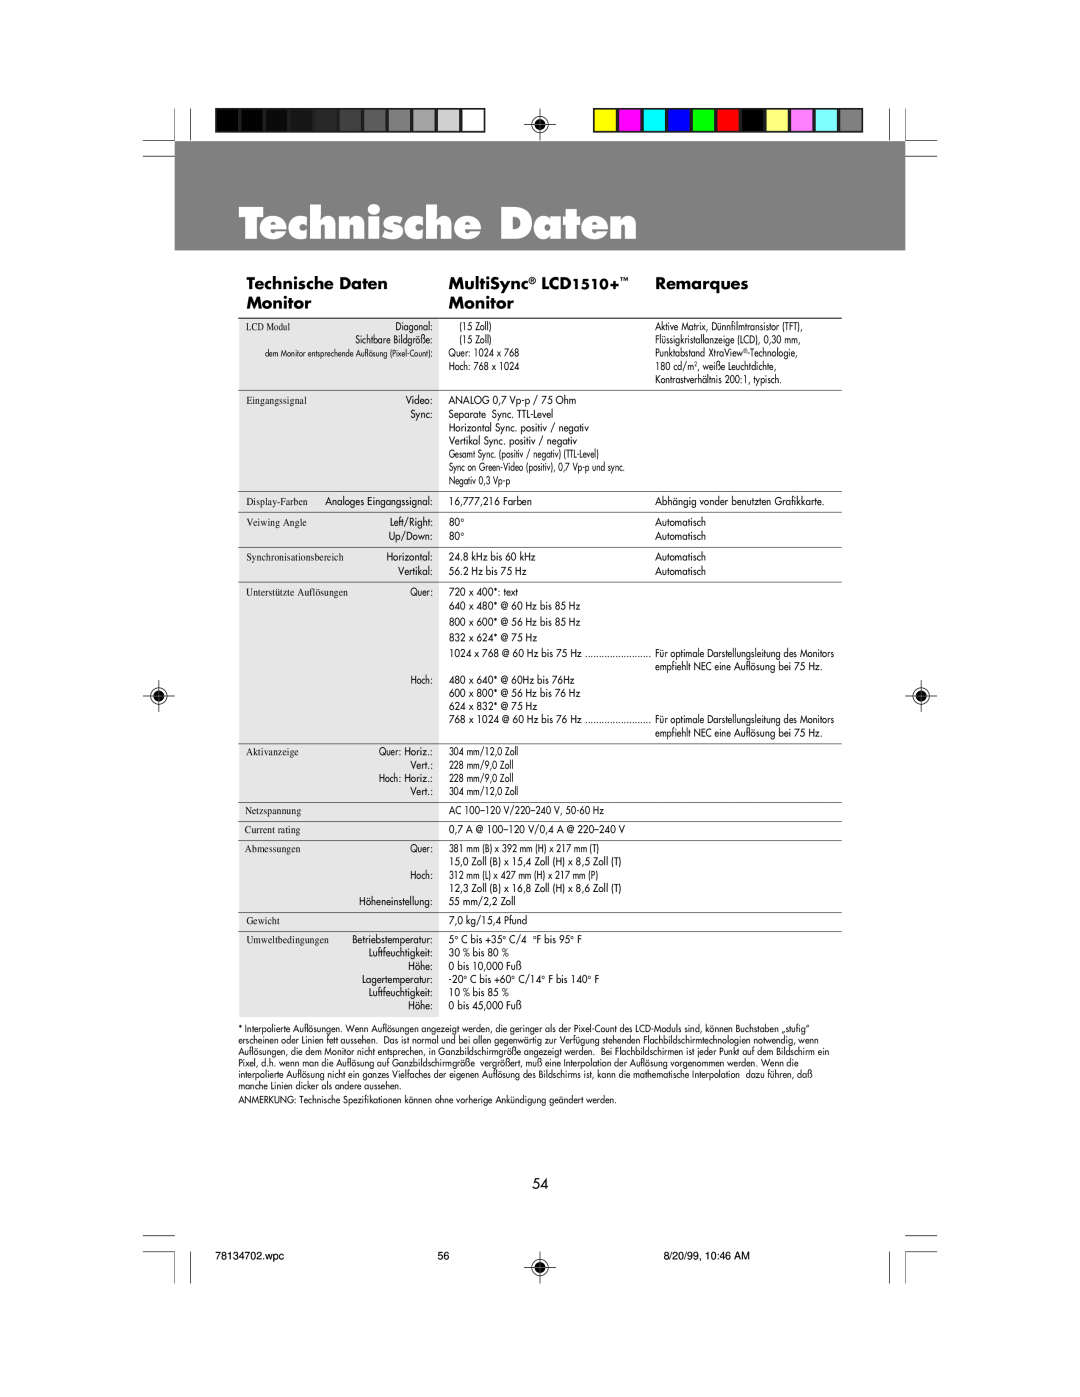 NEC user manual Technische Daten, MultiSync LCD1510+, Remarques, Monitor 